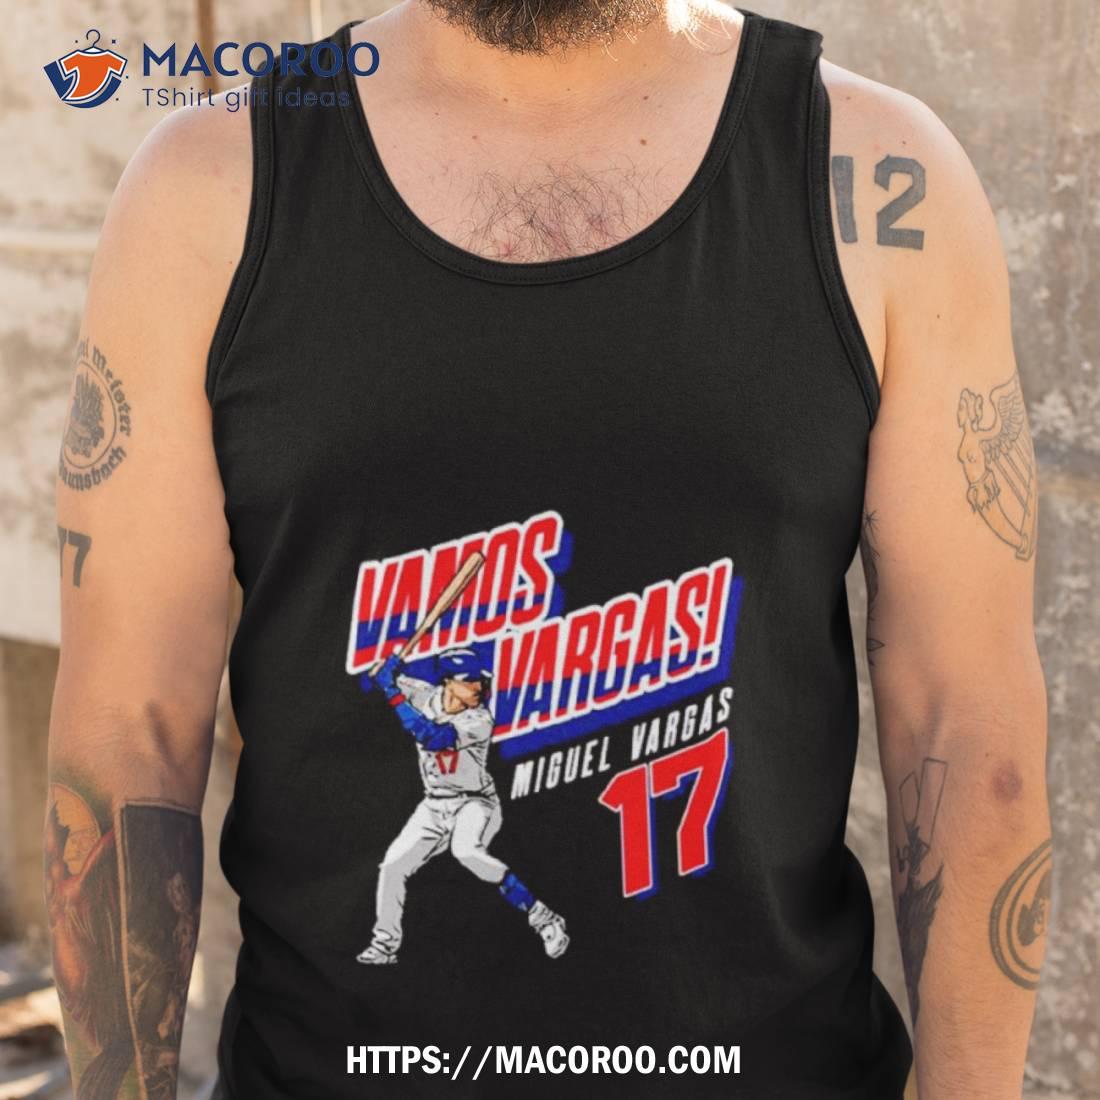 Miguel Vargas Vamos Los Angeles Dodgers 17 shirt - Dalatshirt